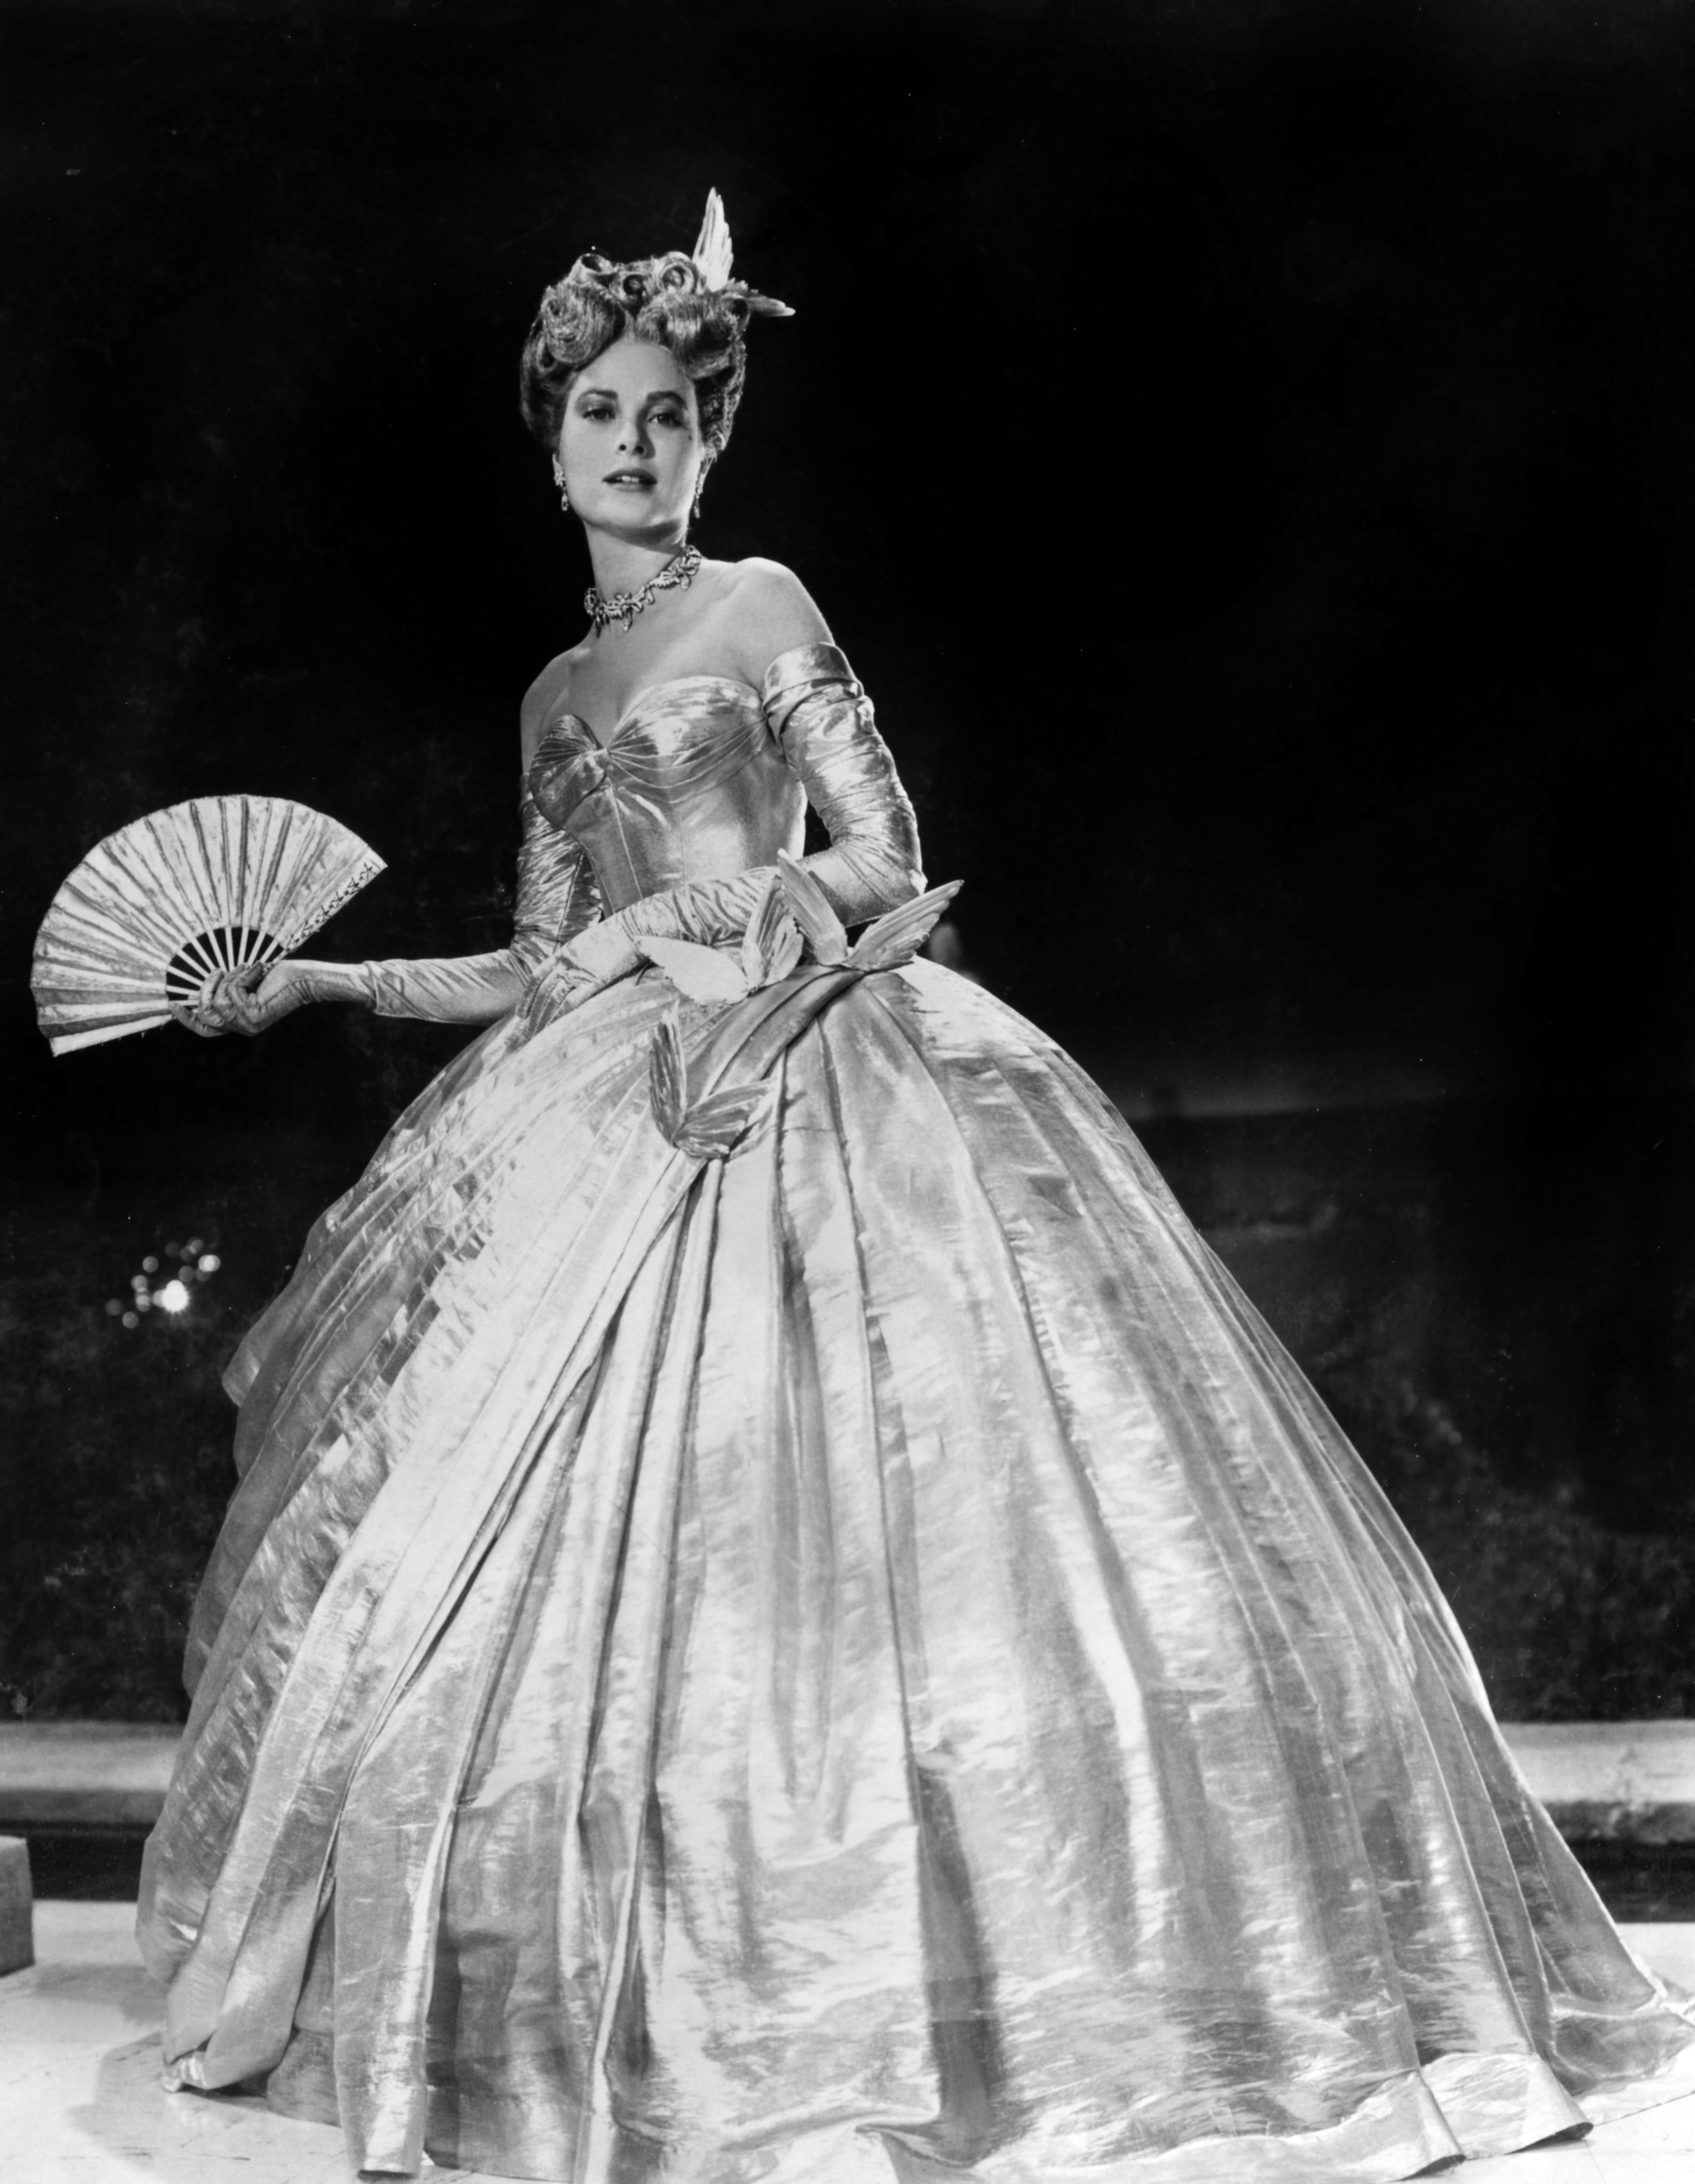 Grace Kelly in an elaborate ballgown